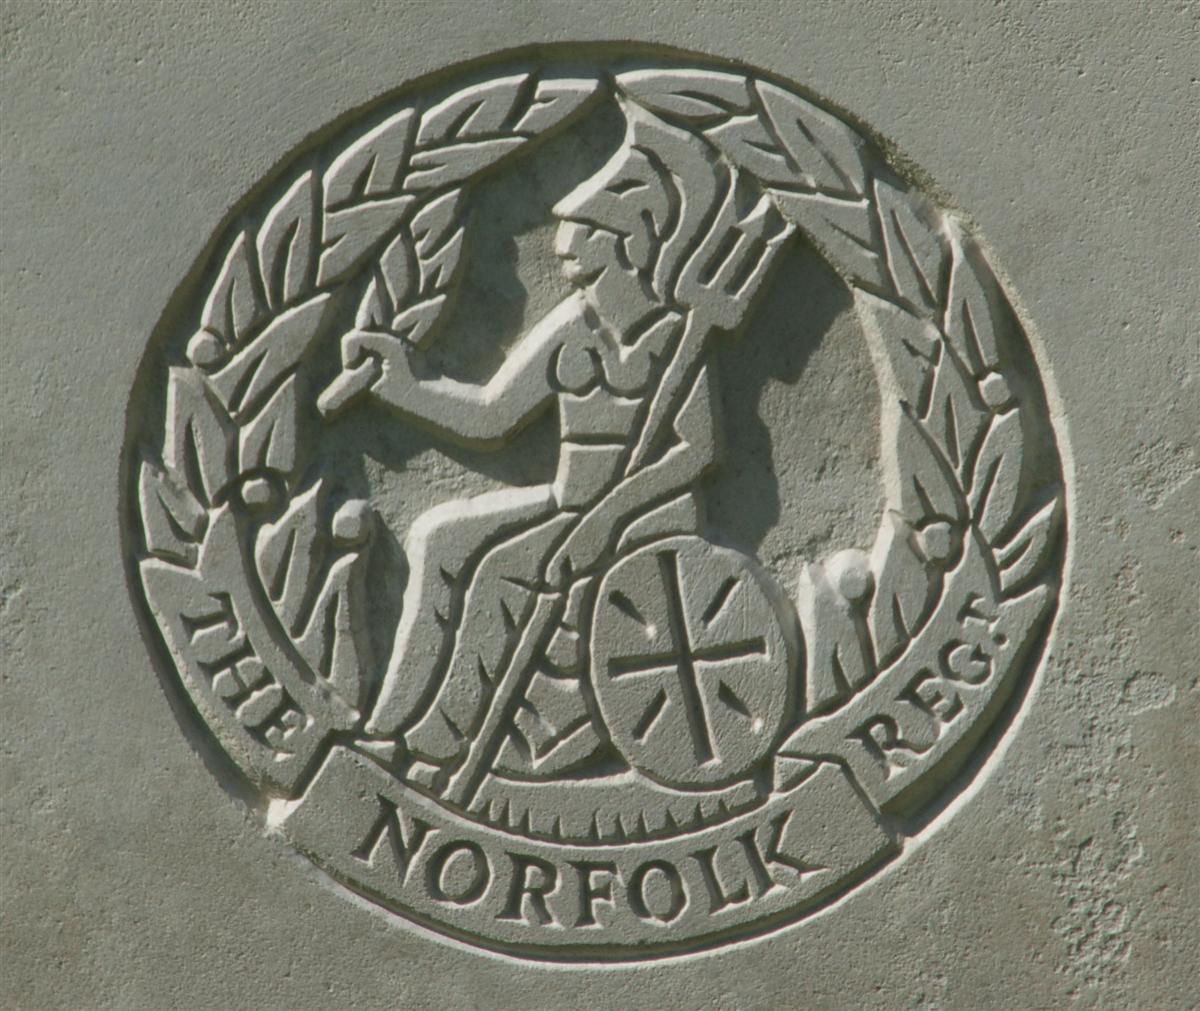 Norfolk Regiment badge